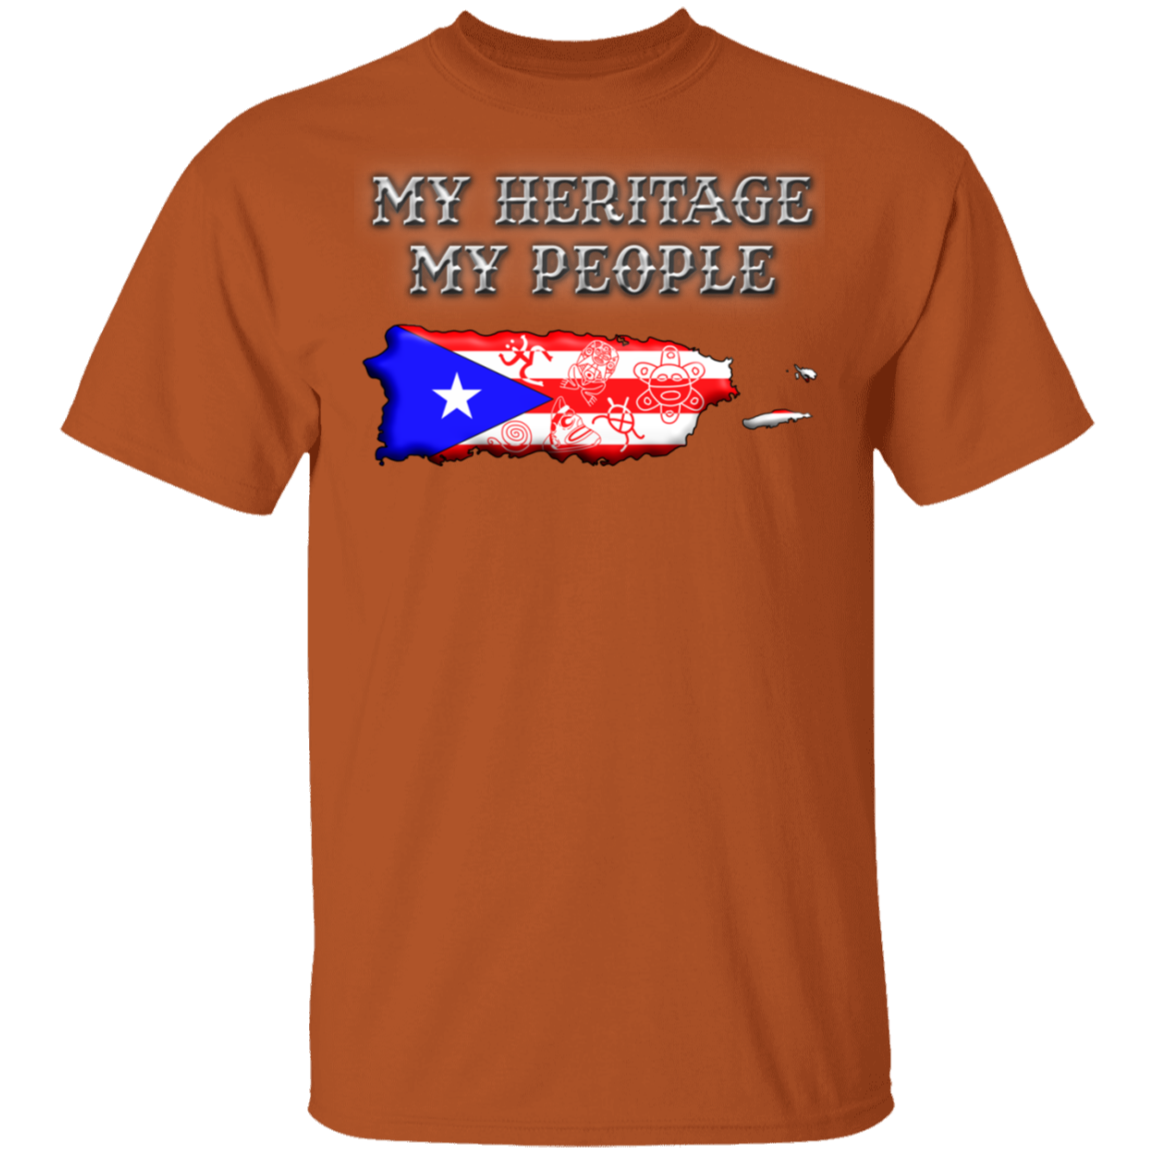 MY HERITAGE / PEOPLE 5.3 oz. T-Shirt